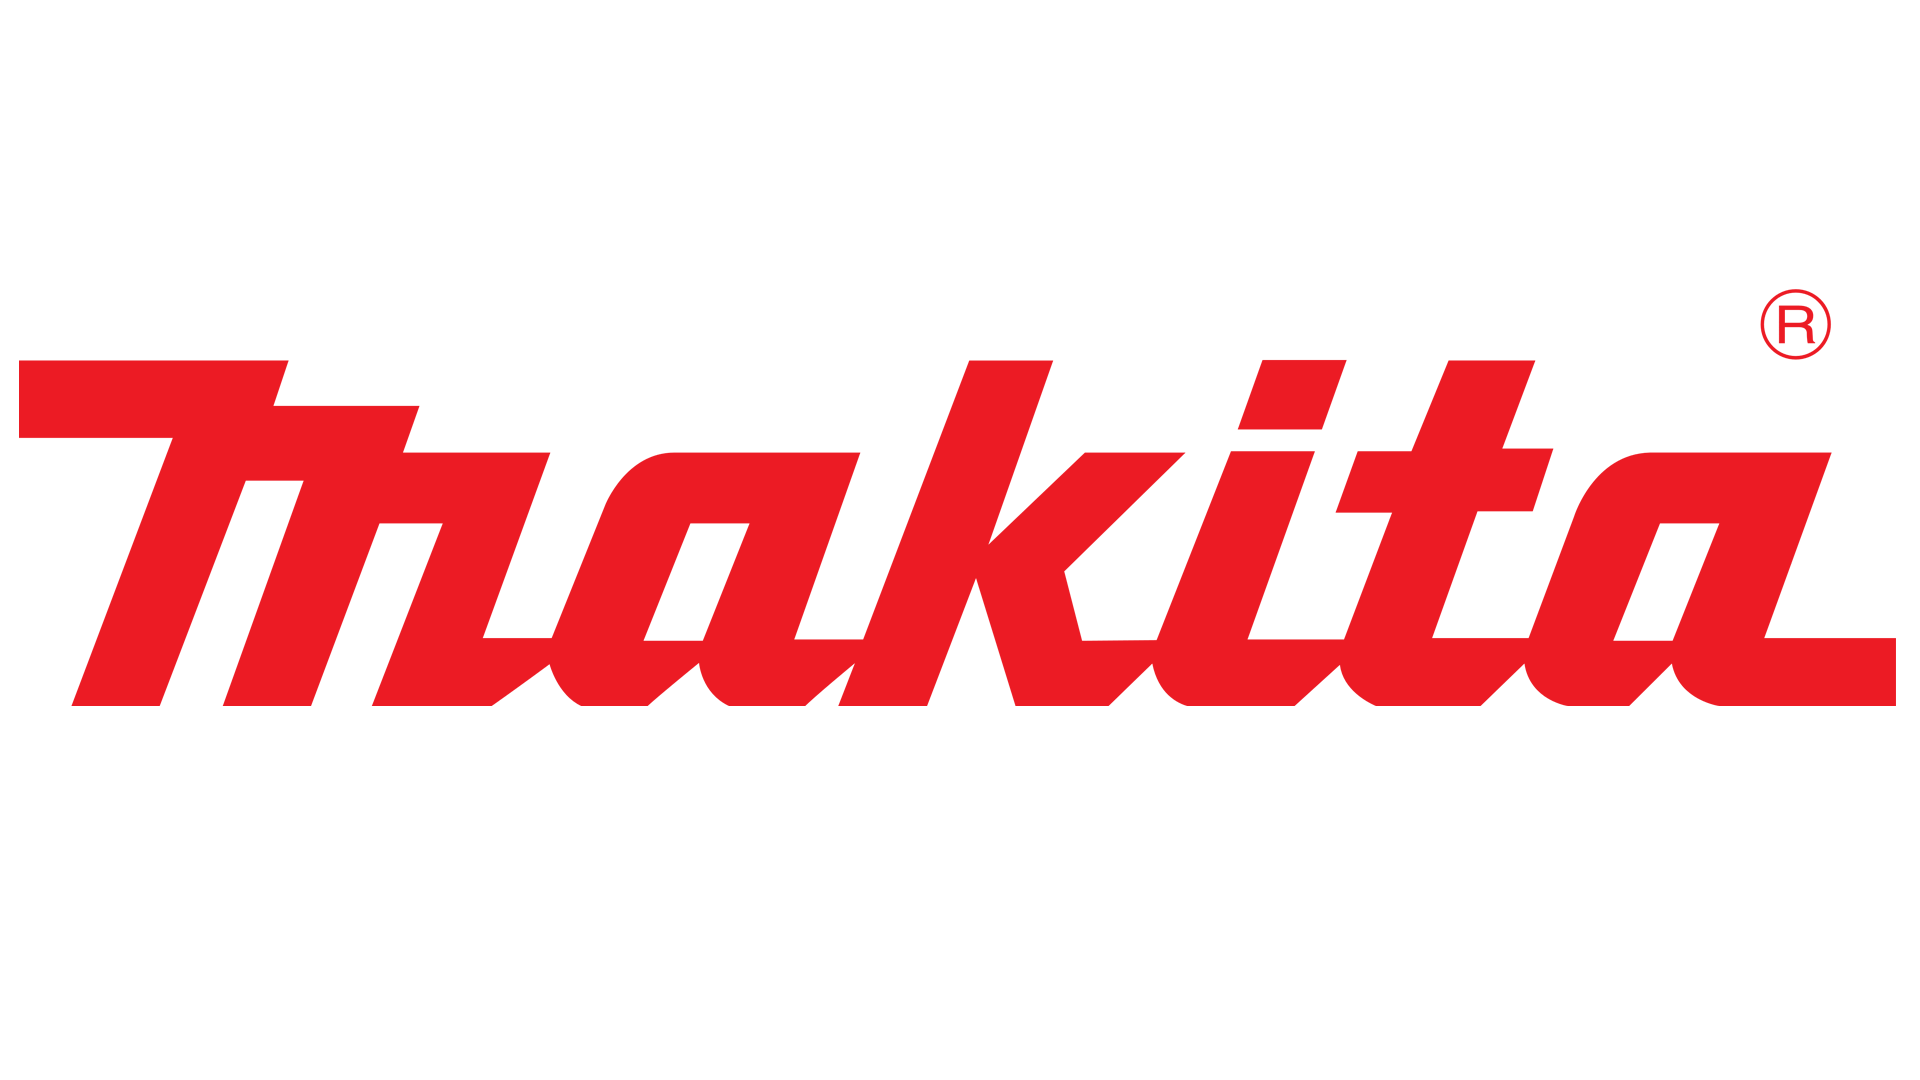 Japanese Manufacturer Logo - Makita Logo, Makita Symbol, Meaning, History and Evolution